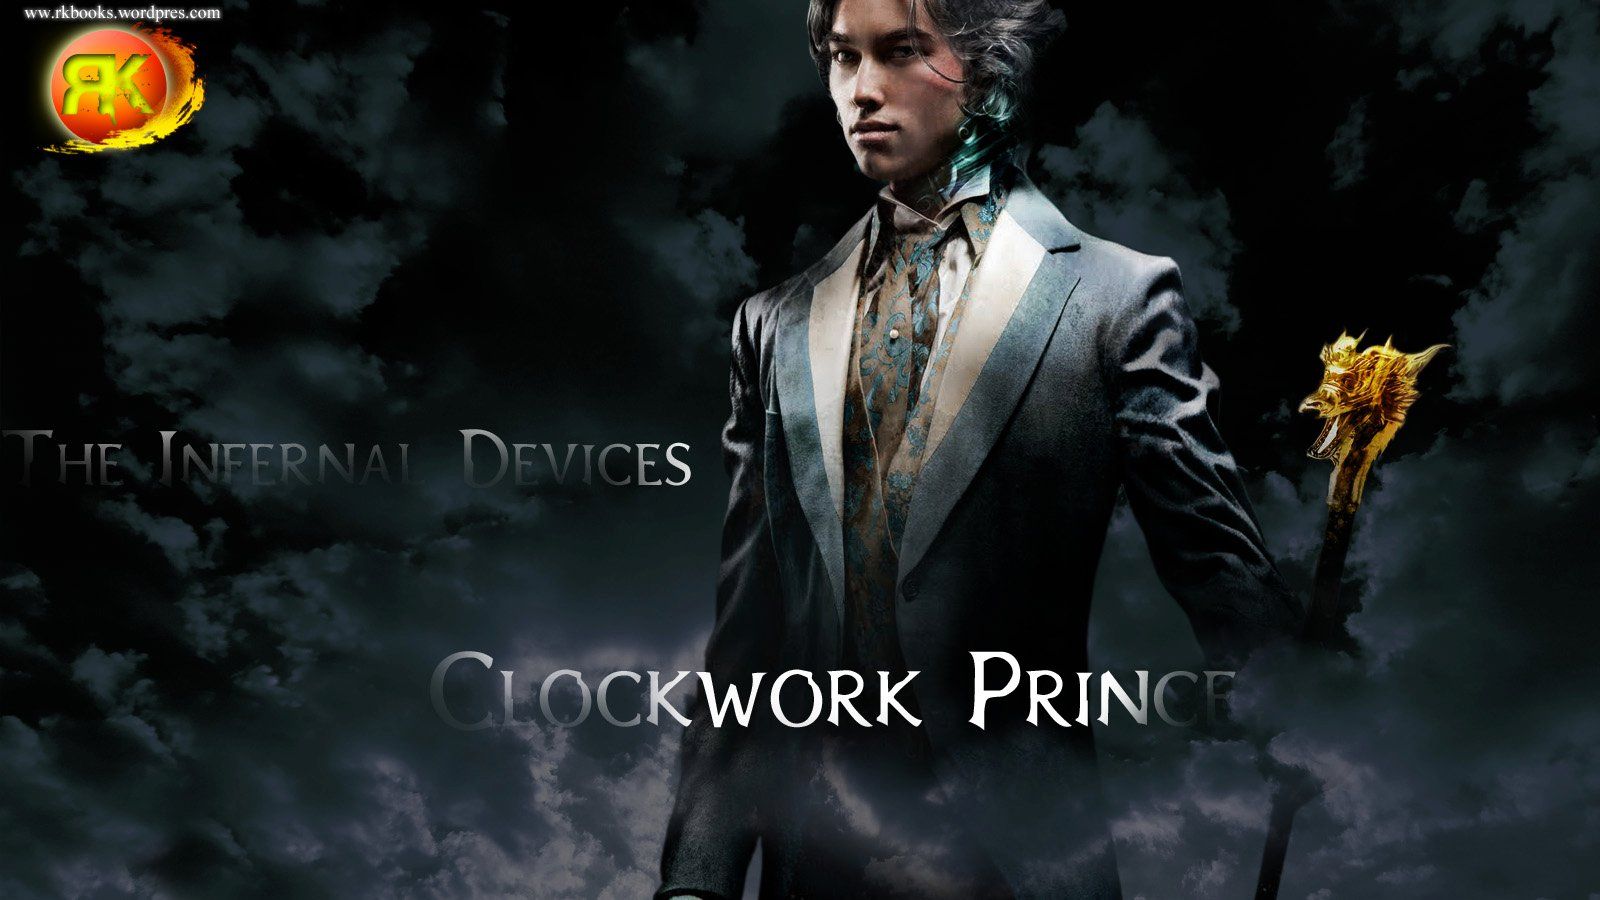 Clockwork Prince Infernal Devices Wallpaper